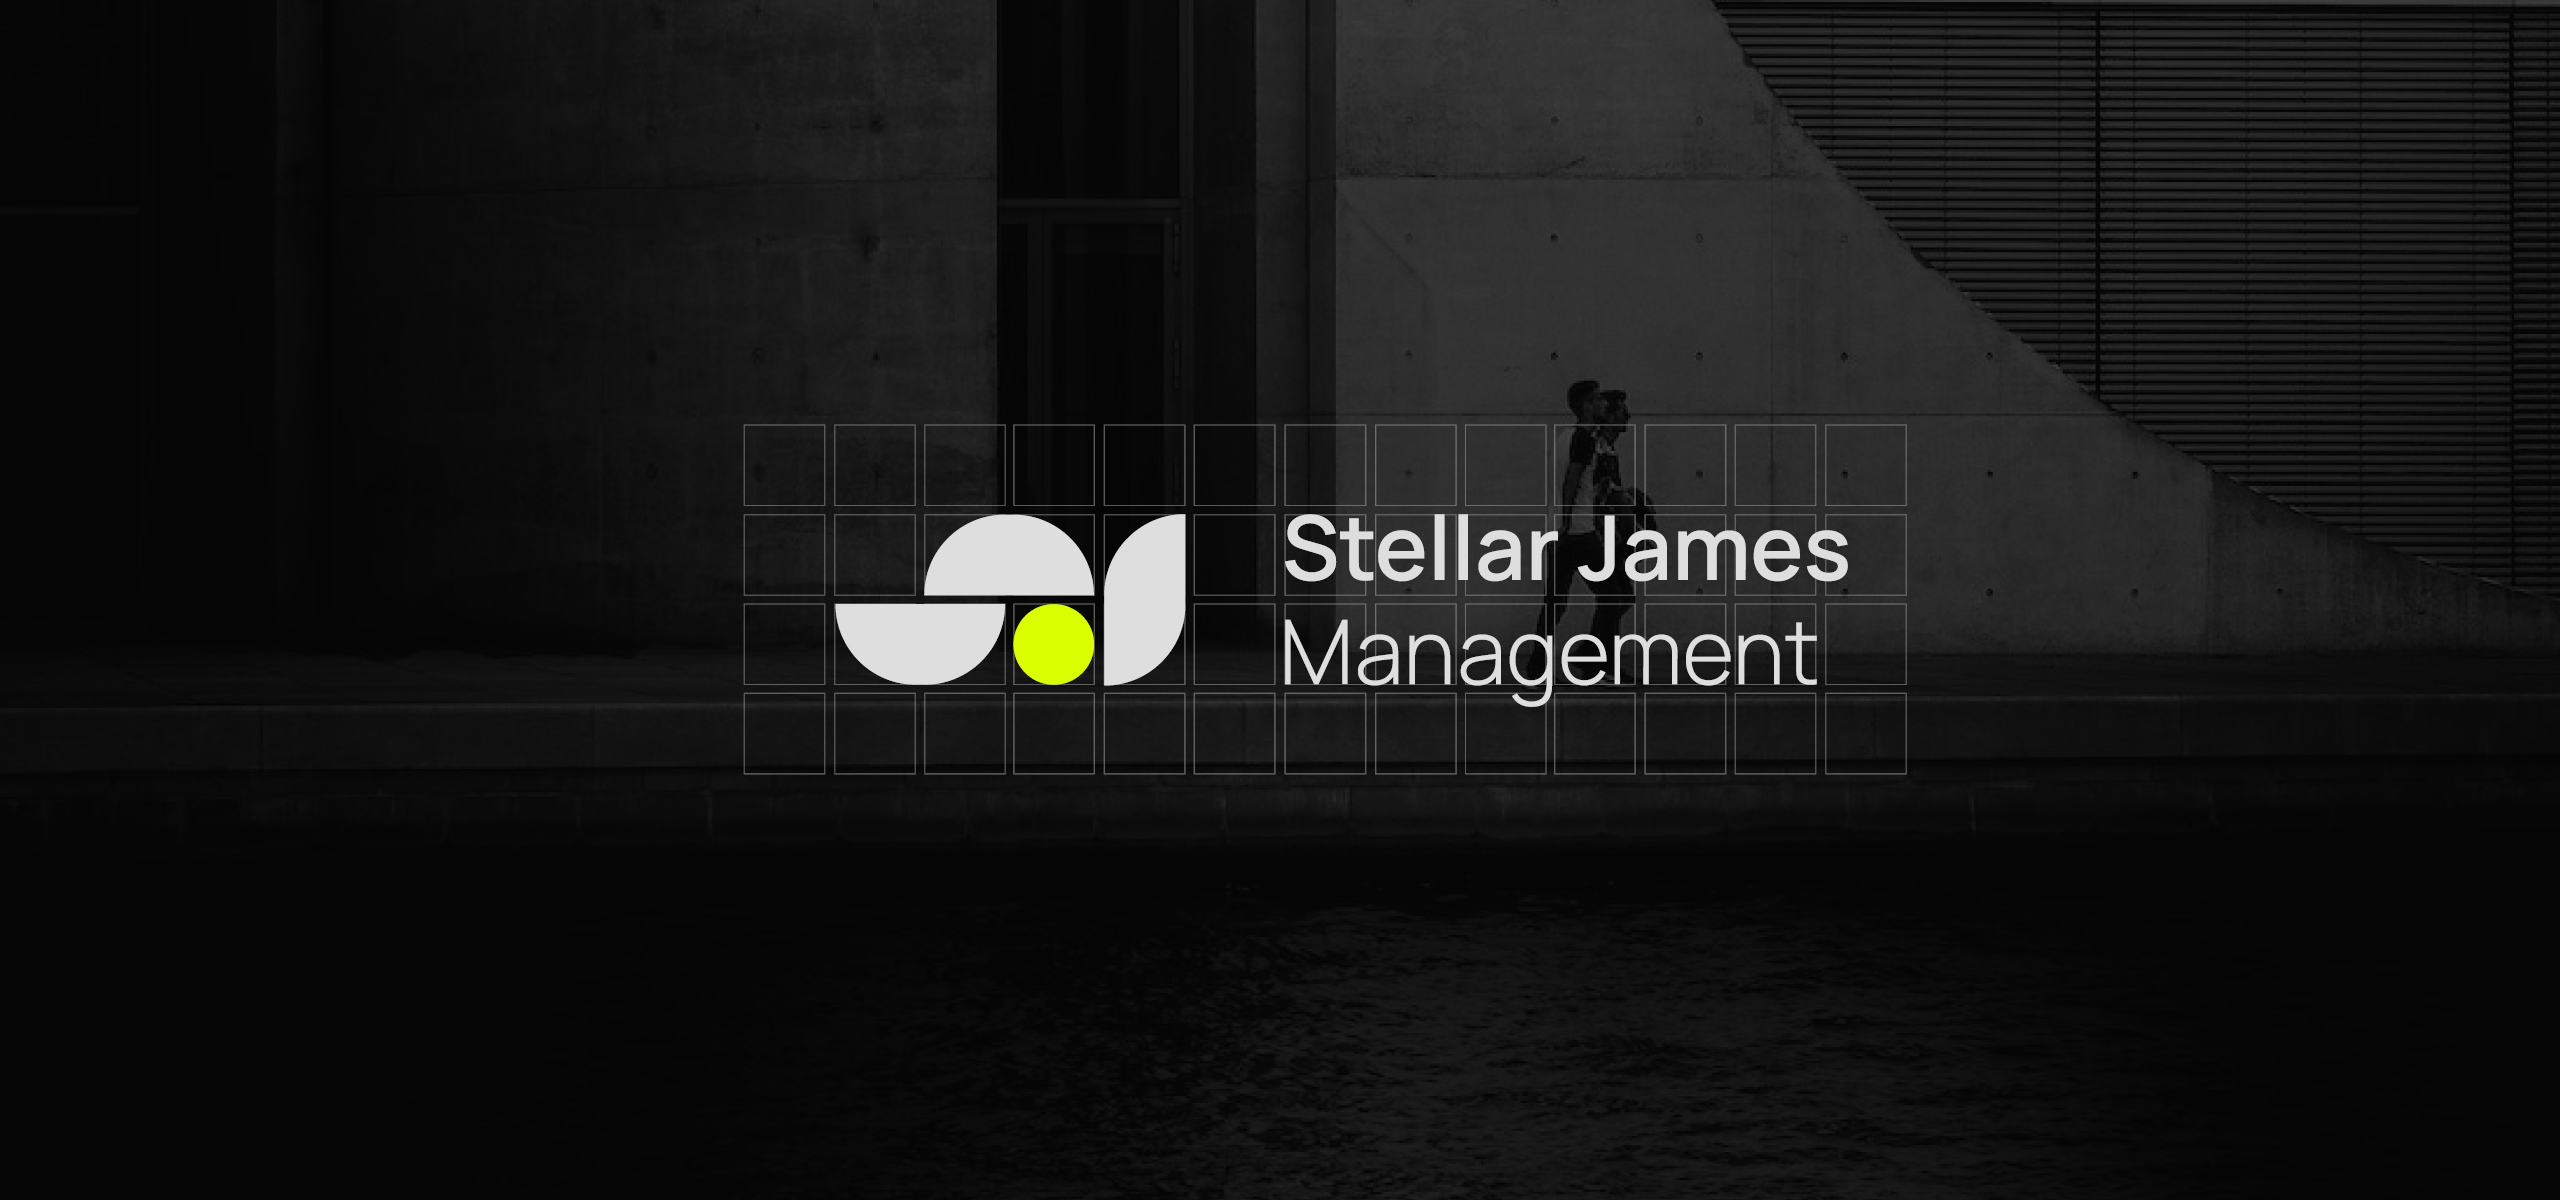 Stellar James Management full lockup logo design